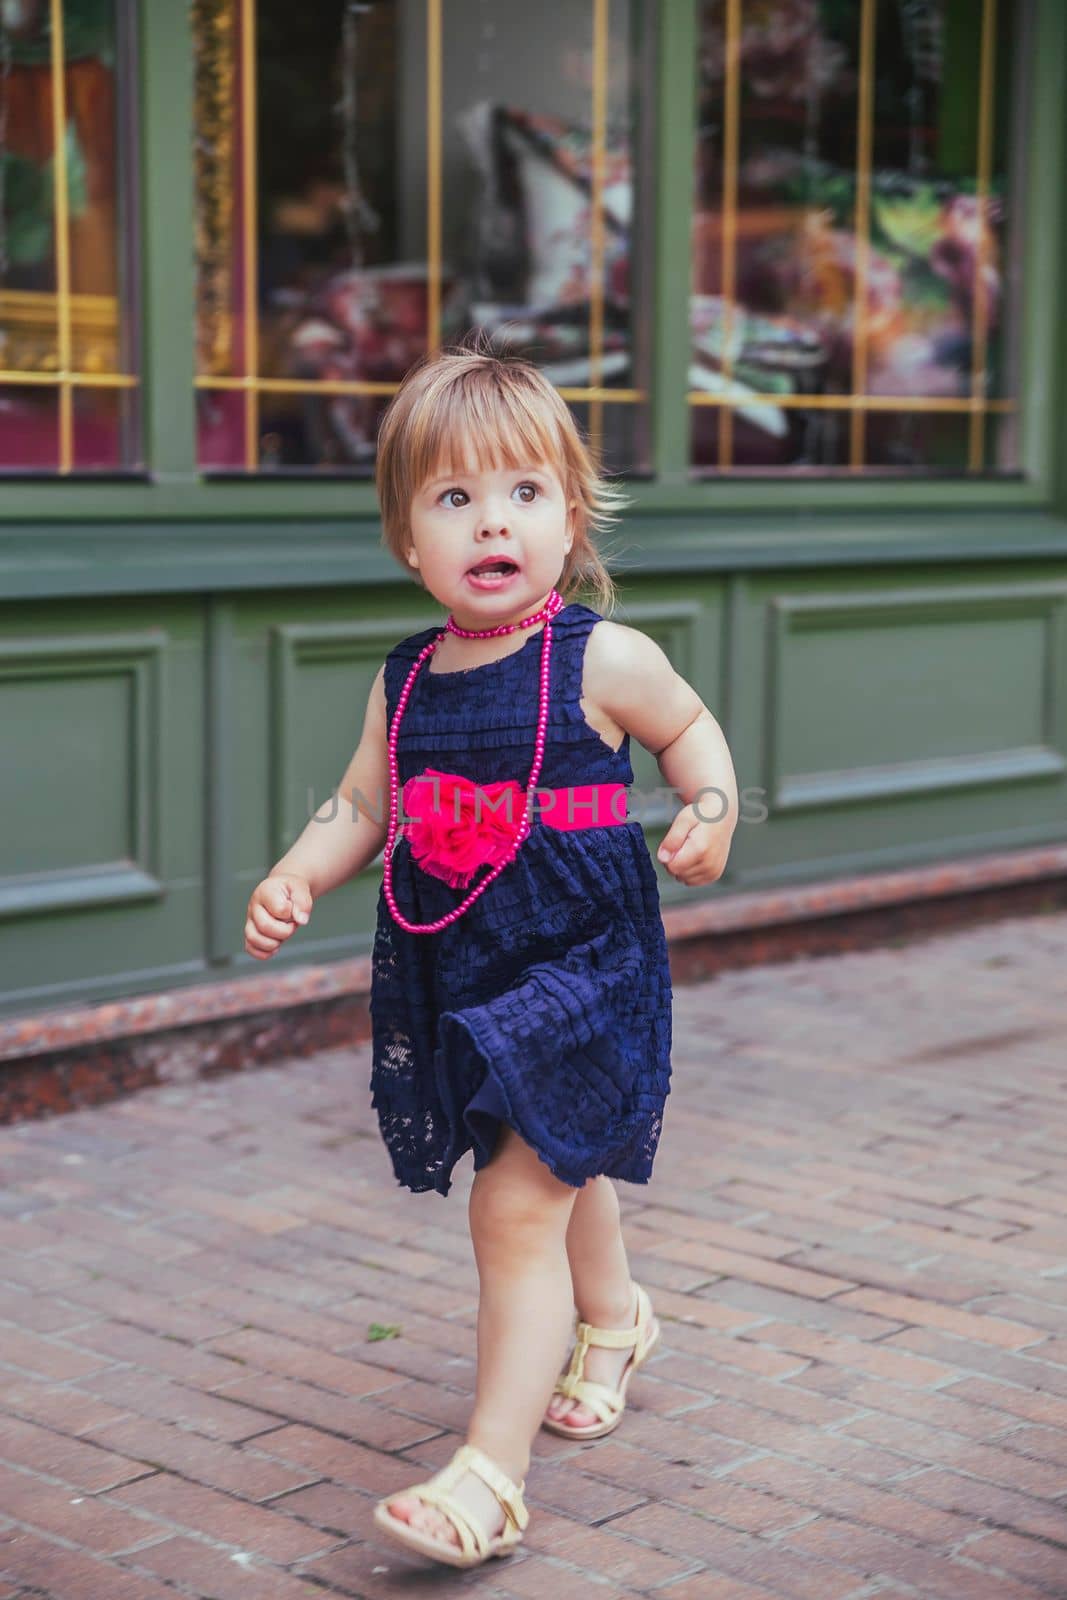 beautiful baby girl in dress running down the street.